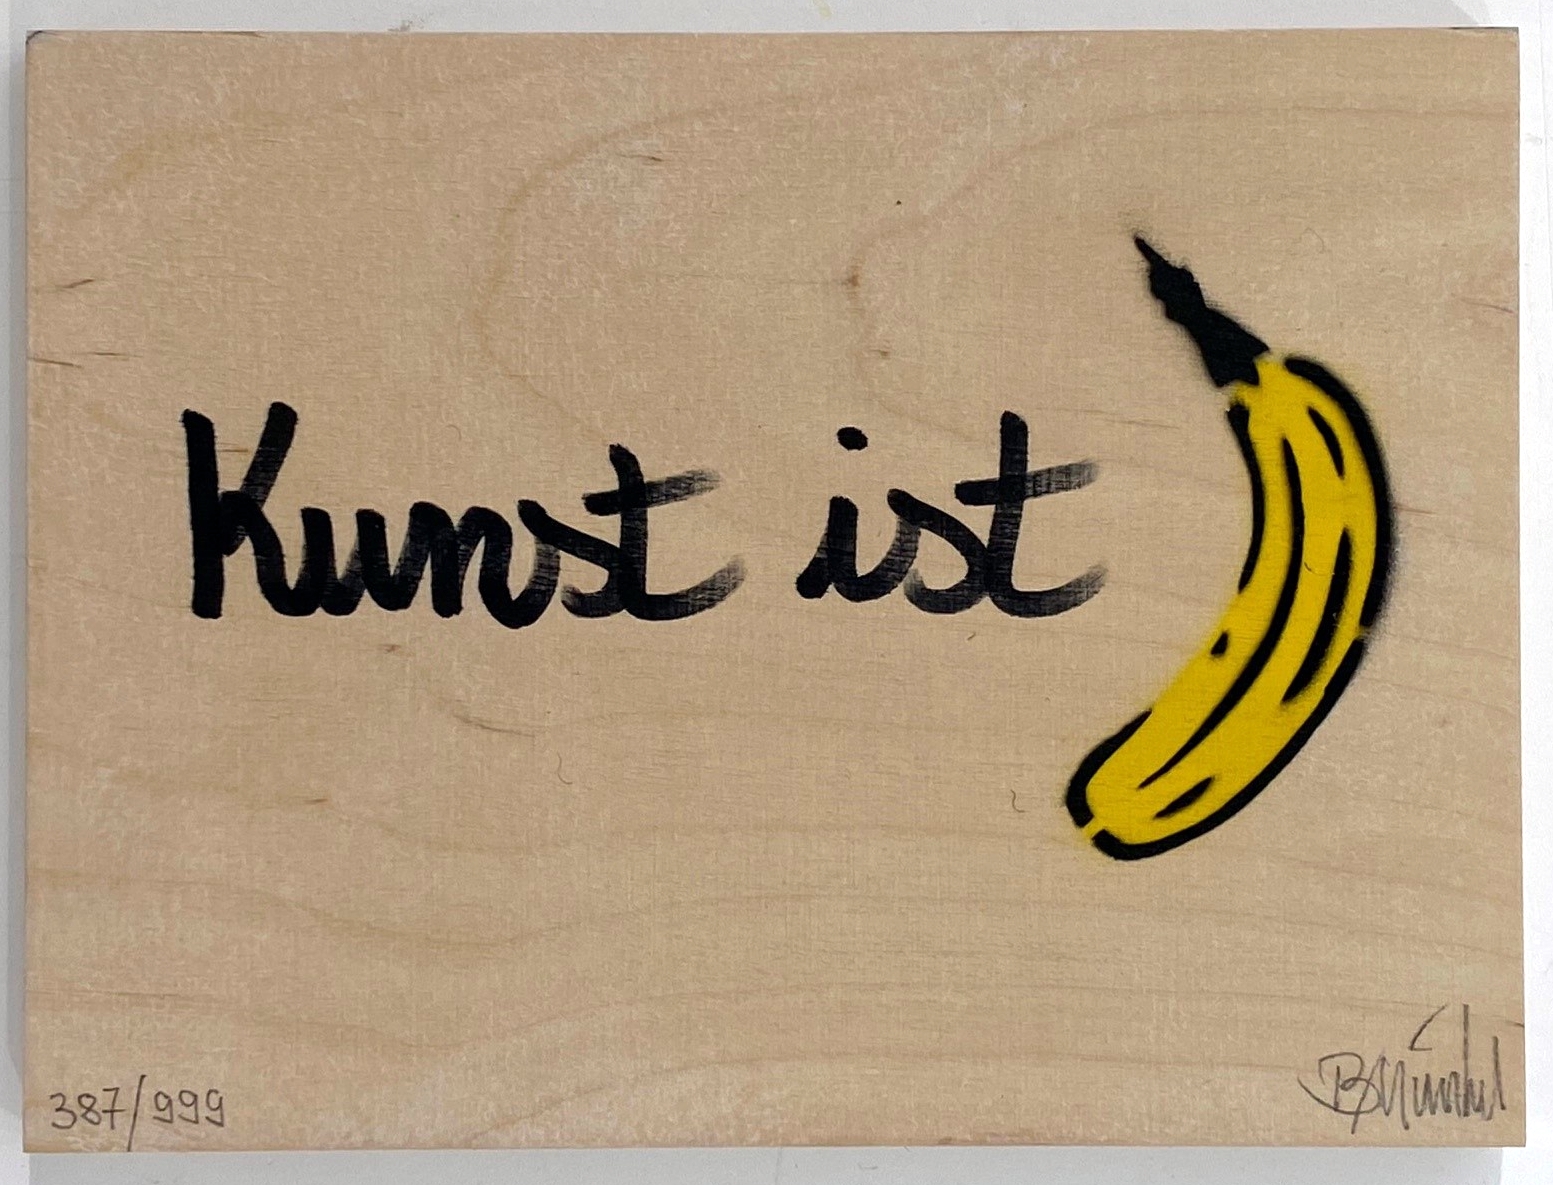 Kunst ist Banane